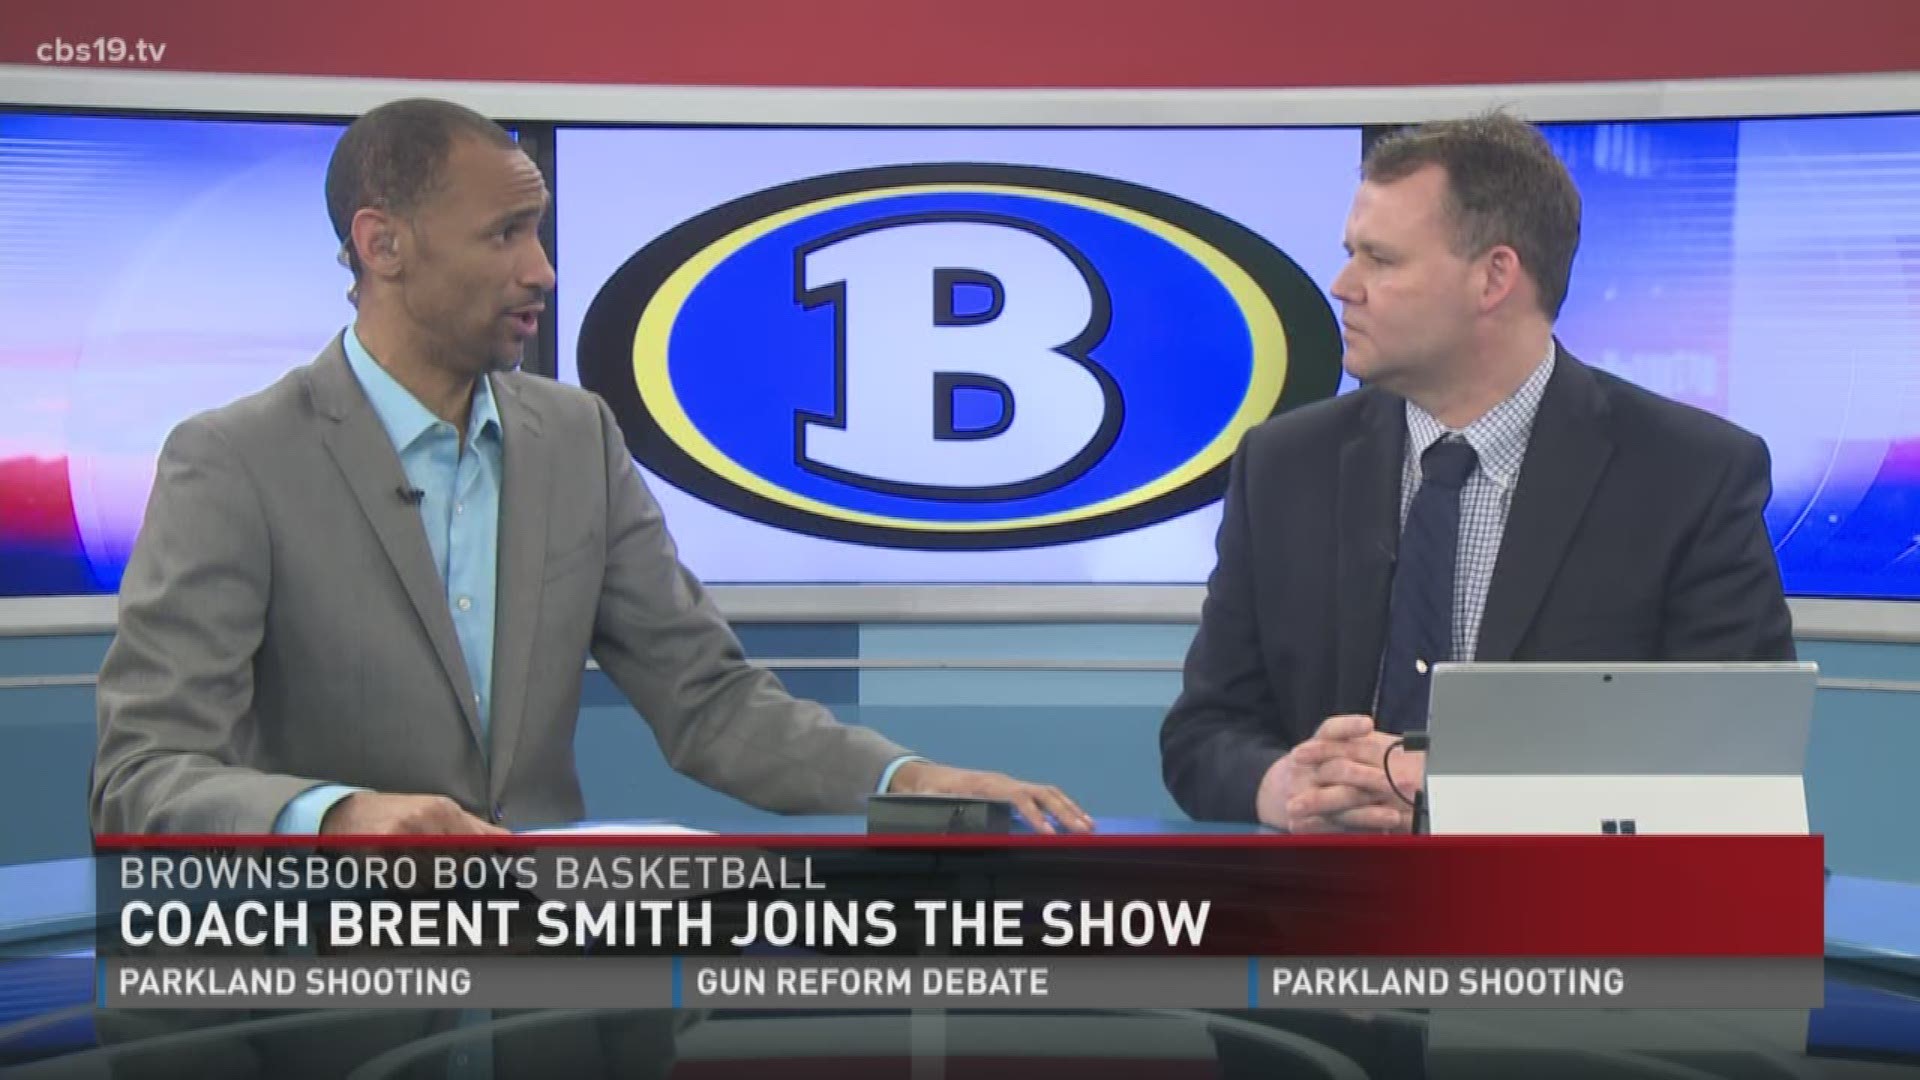 Brownsboro Boys basketball coach Brent Smith joins the show.